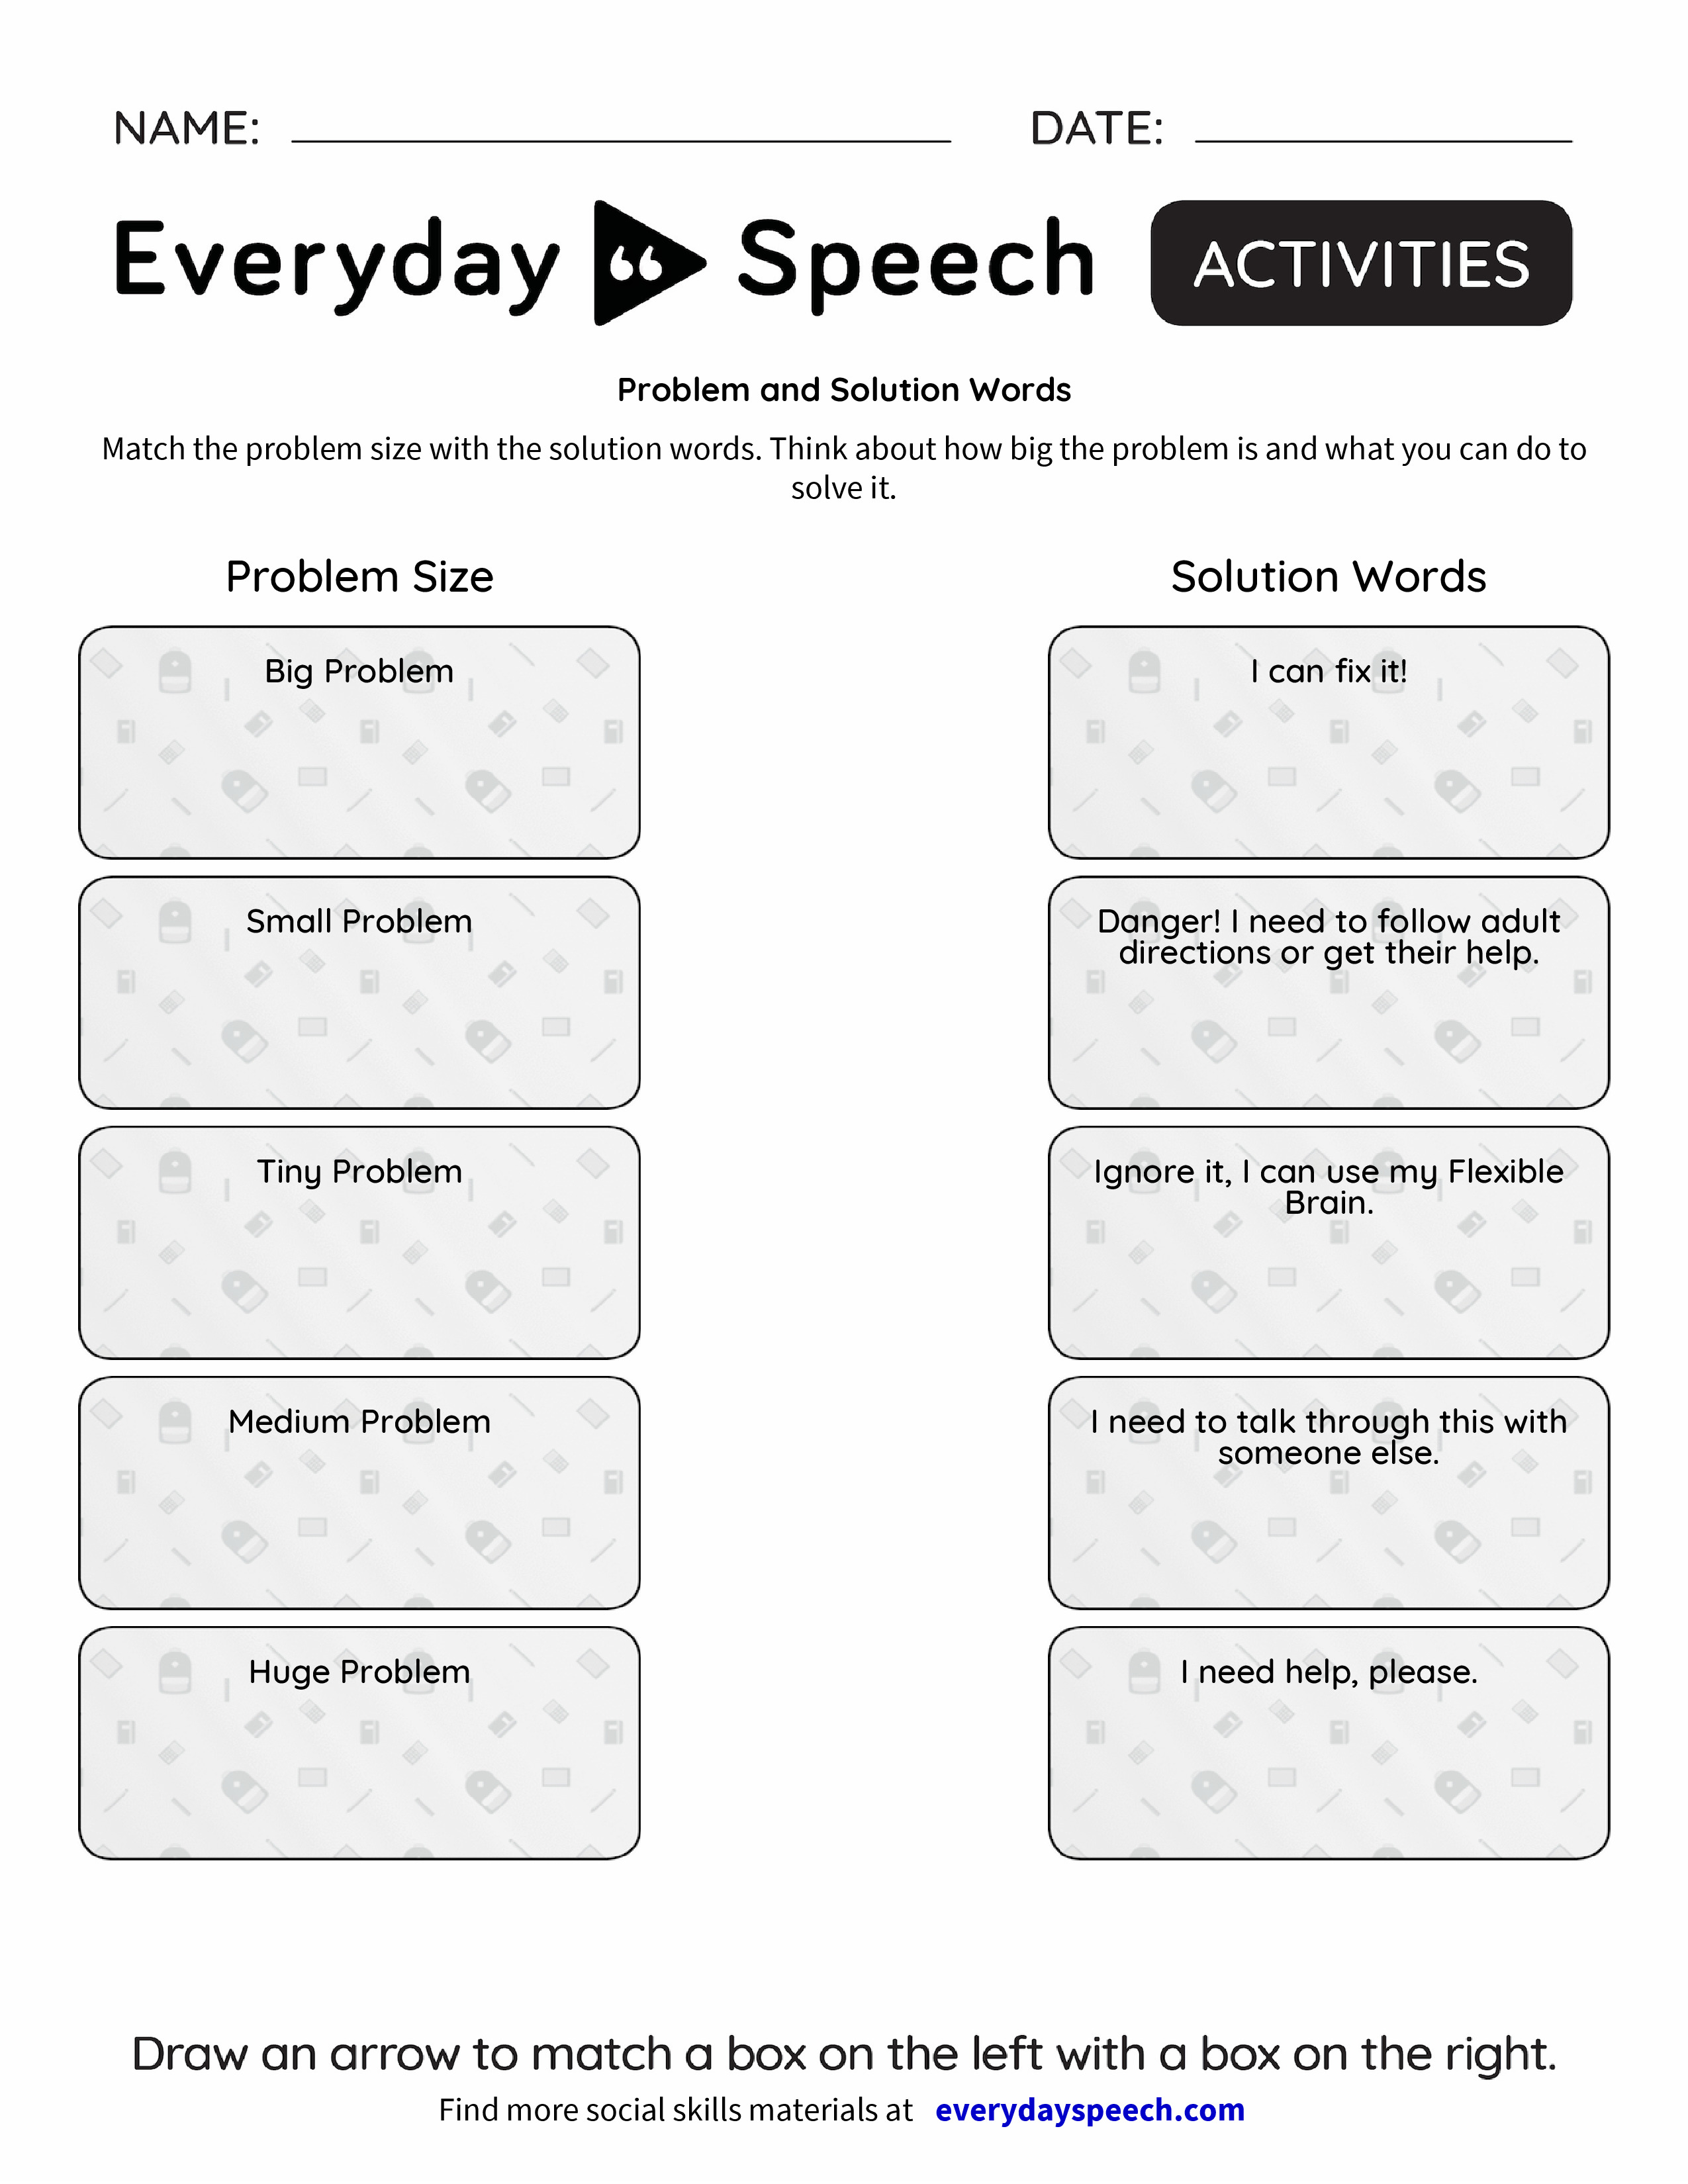 Problem And Solution Words Everyday Speech Everyday Speech